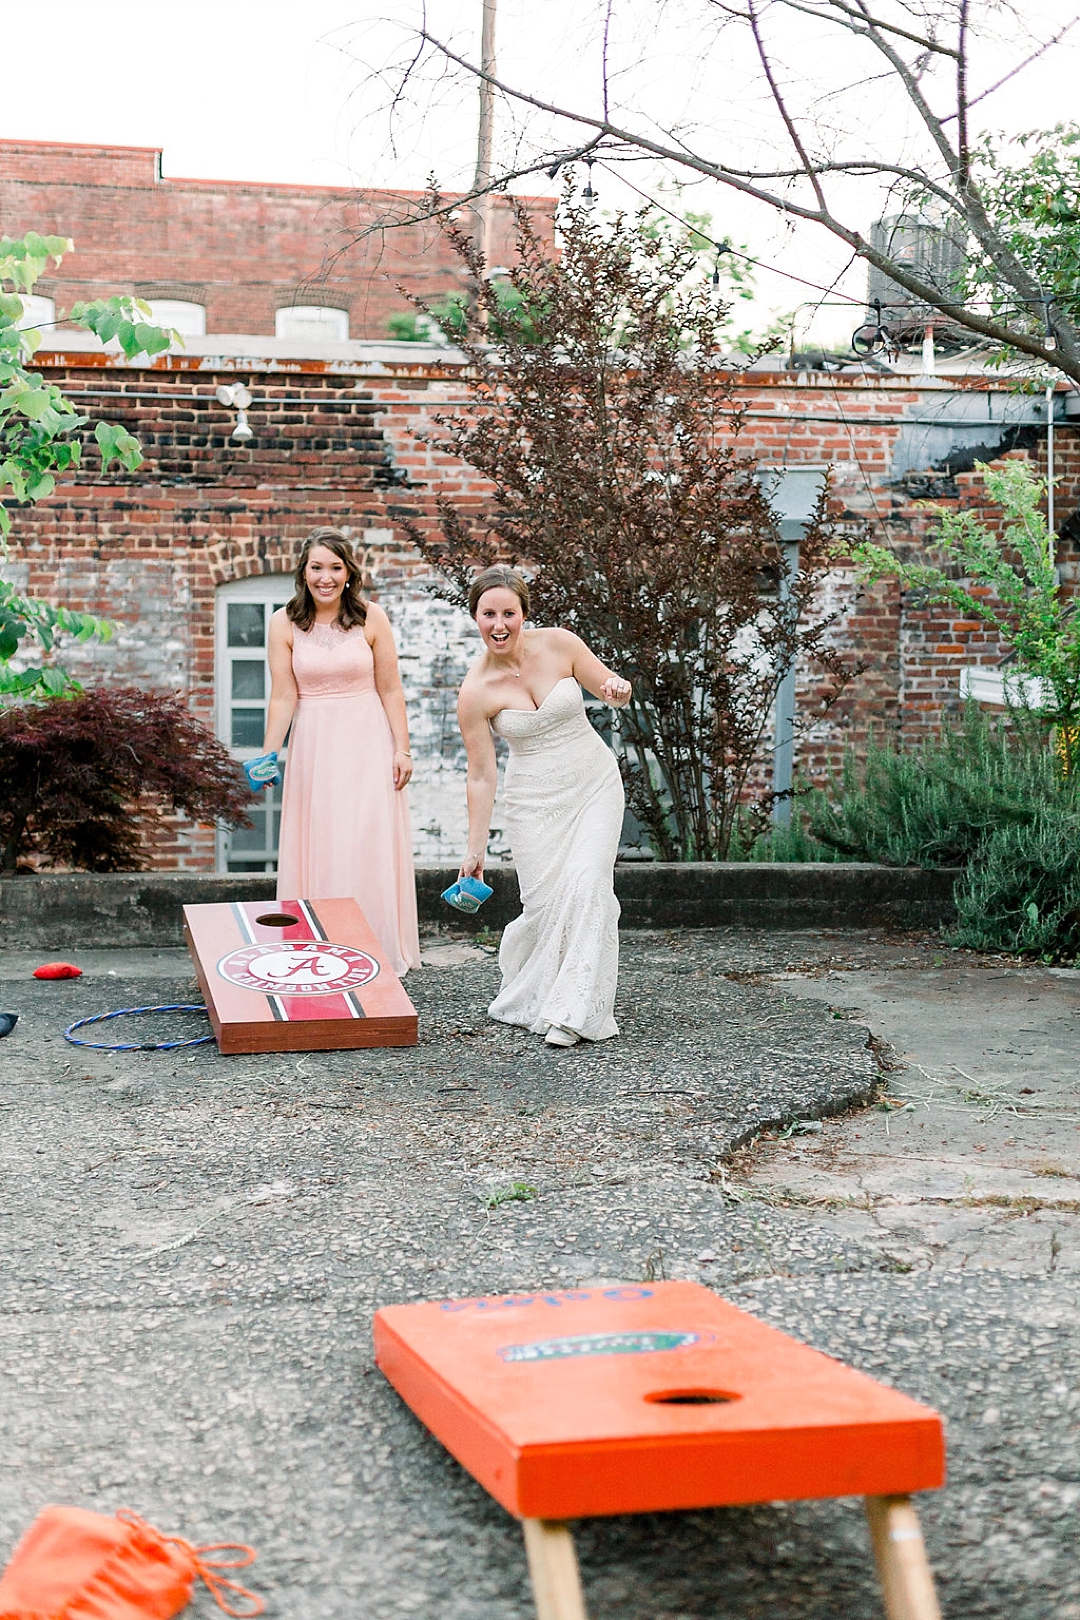 Wedding reception dance party, Photos by Leigh Wolfe, Atlanta's top wedding photographer